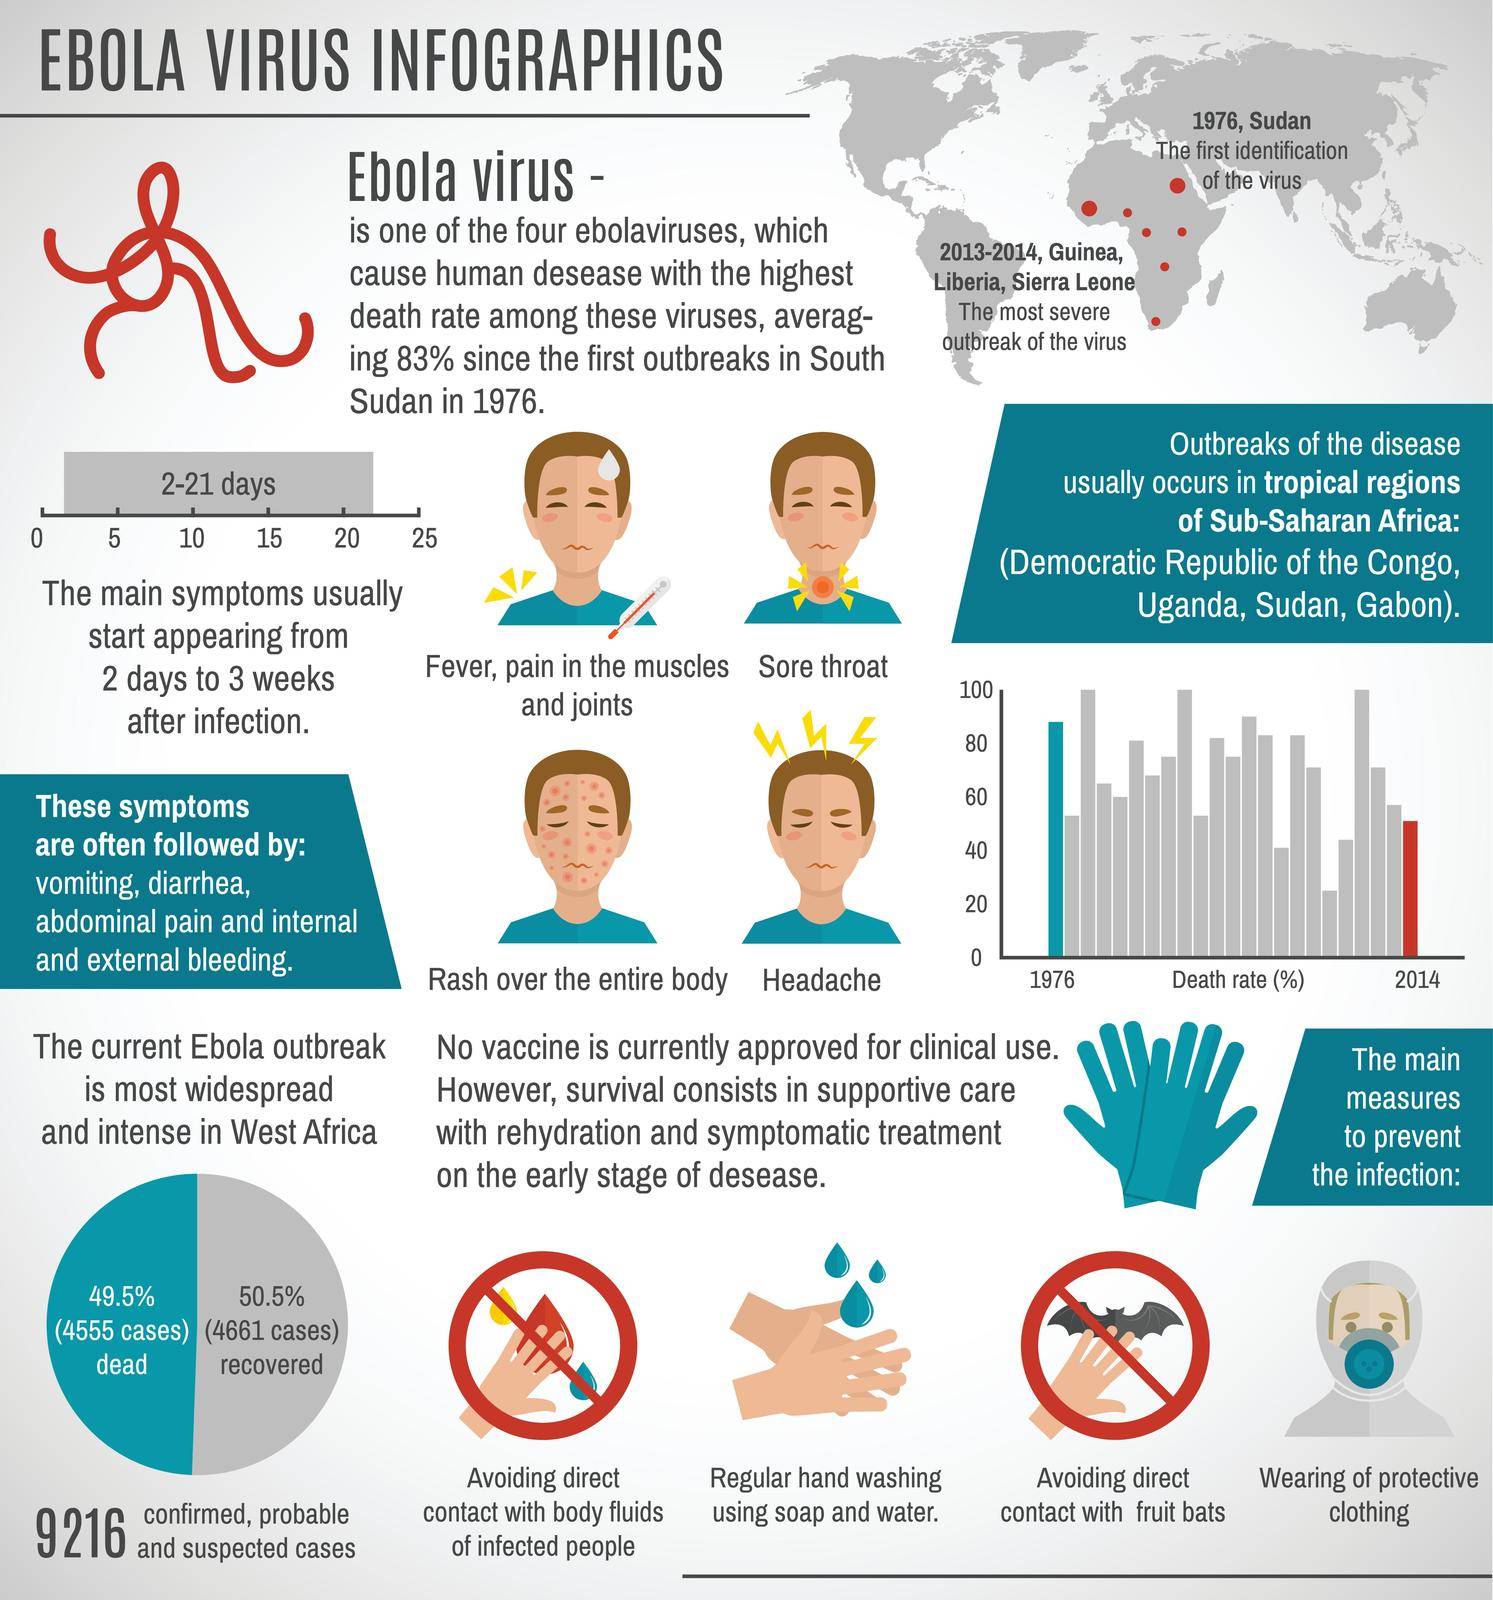 Ebola virus infographics  by mstjahanara